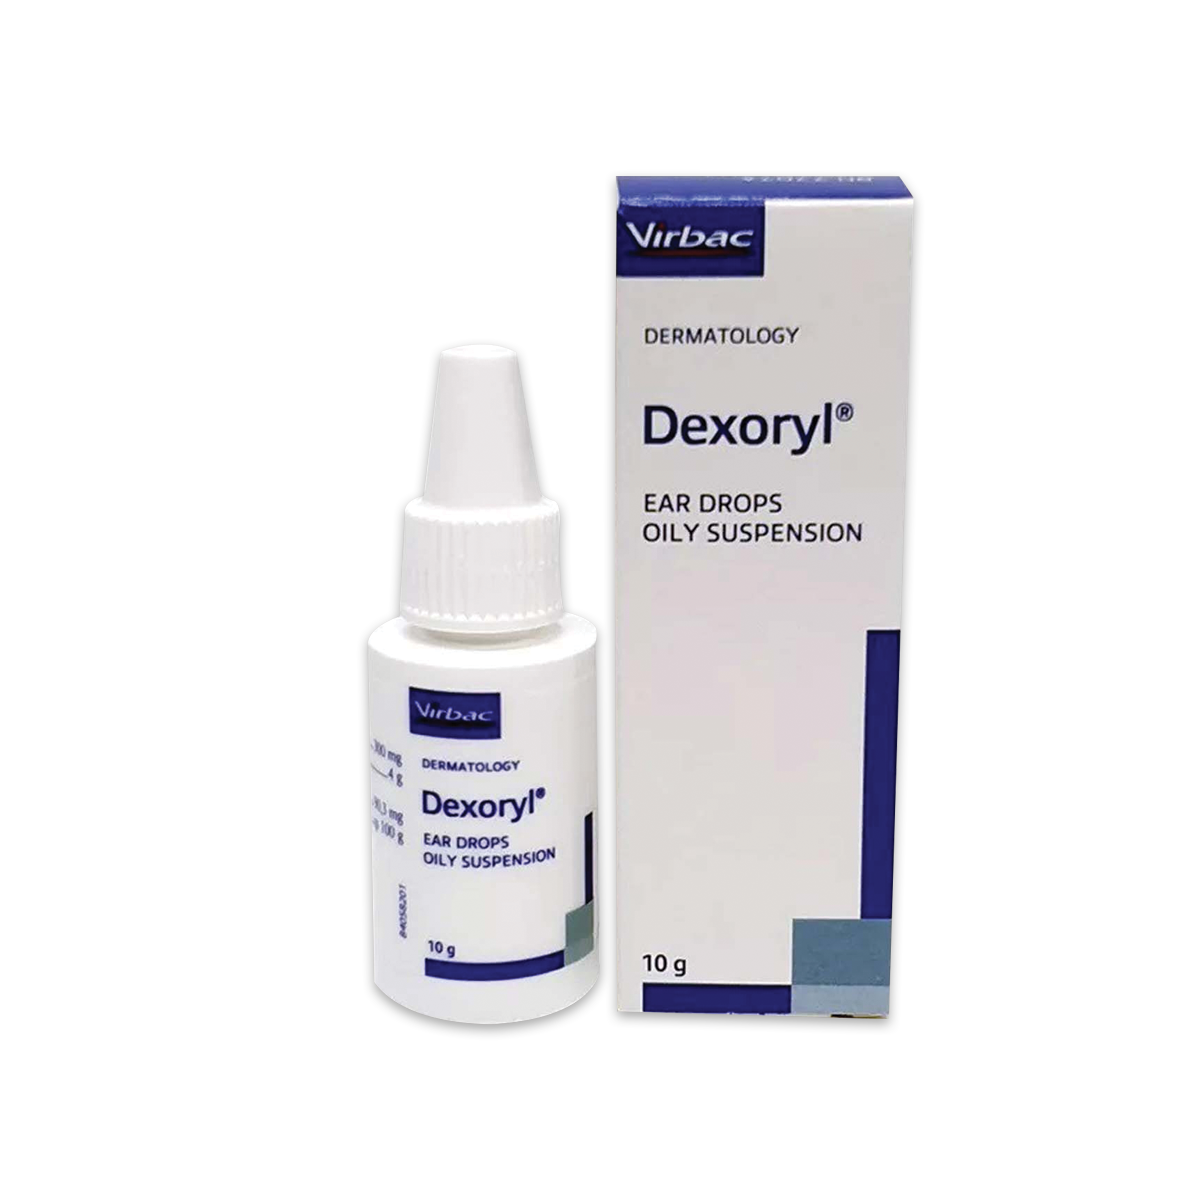 Virbac Dexoryl Ear Drop เวอร์แบค เดโซริว ยาหยอดหูรักษาช่องหูอักเสบ ขนาด 10 กรัม